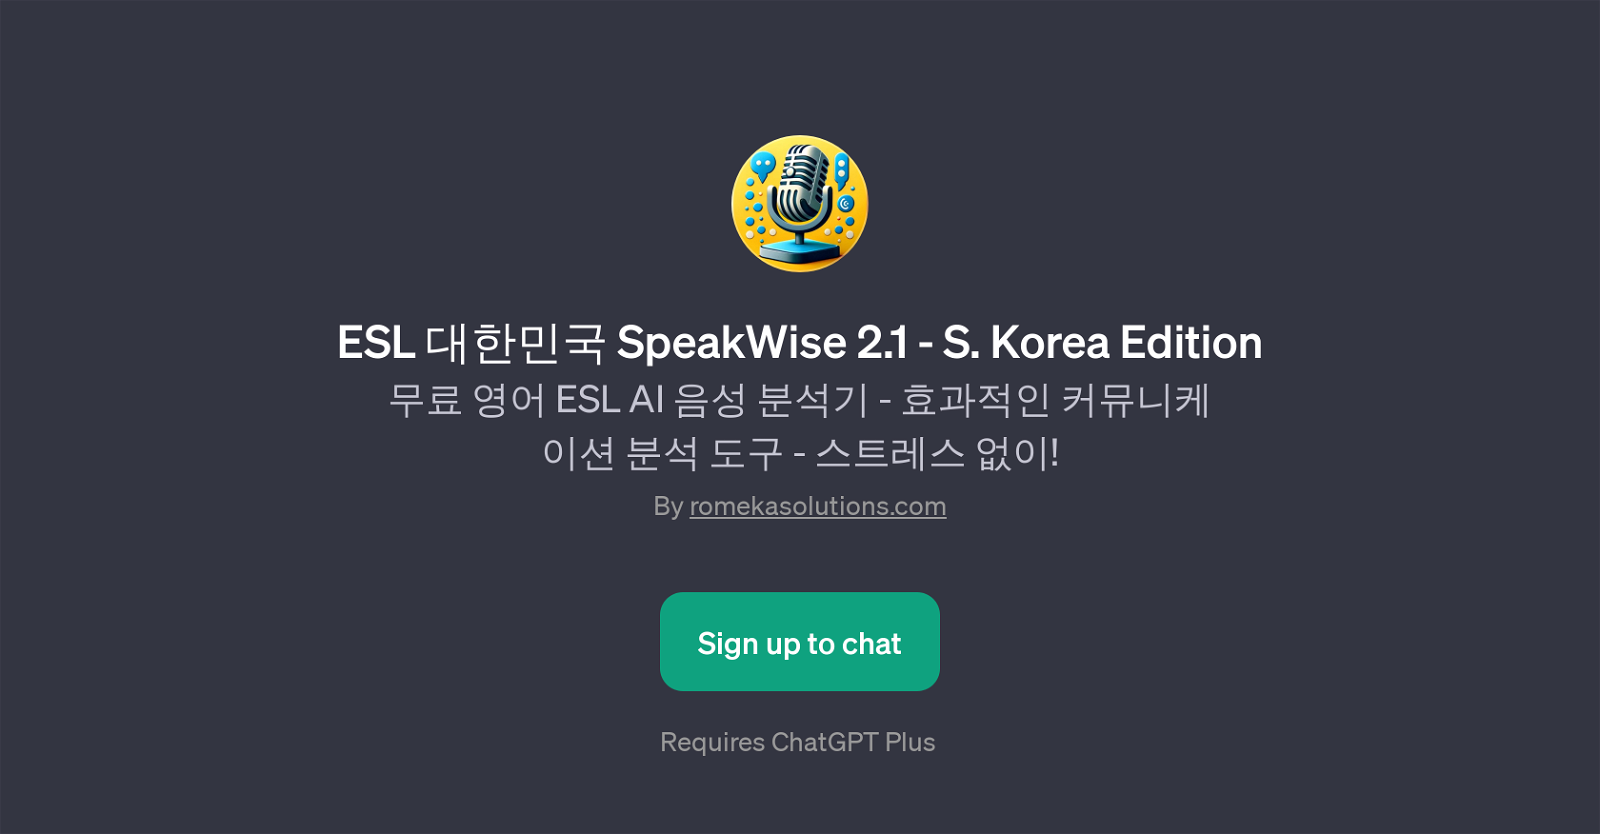 ESL  SpeakWise 2.1 - S. Korea Edition website